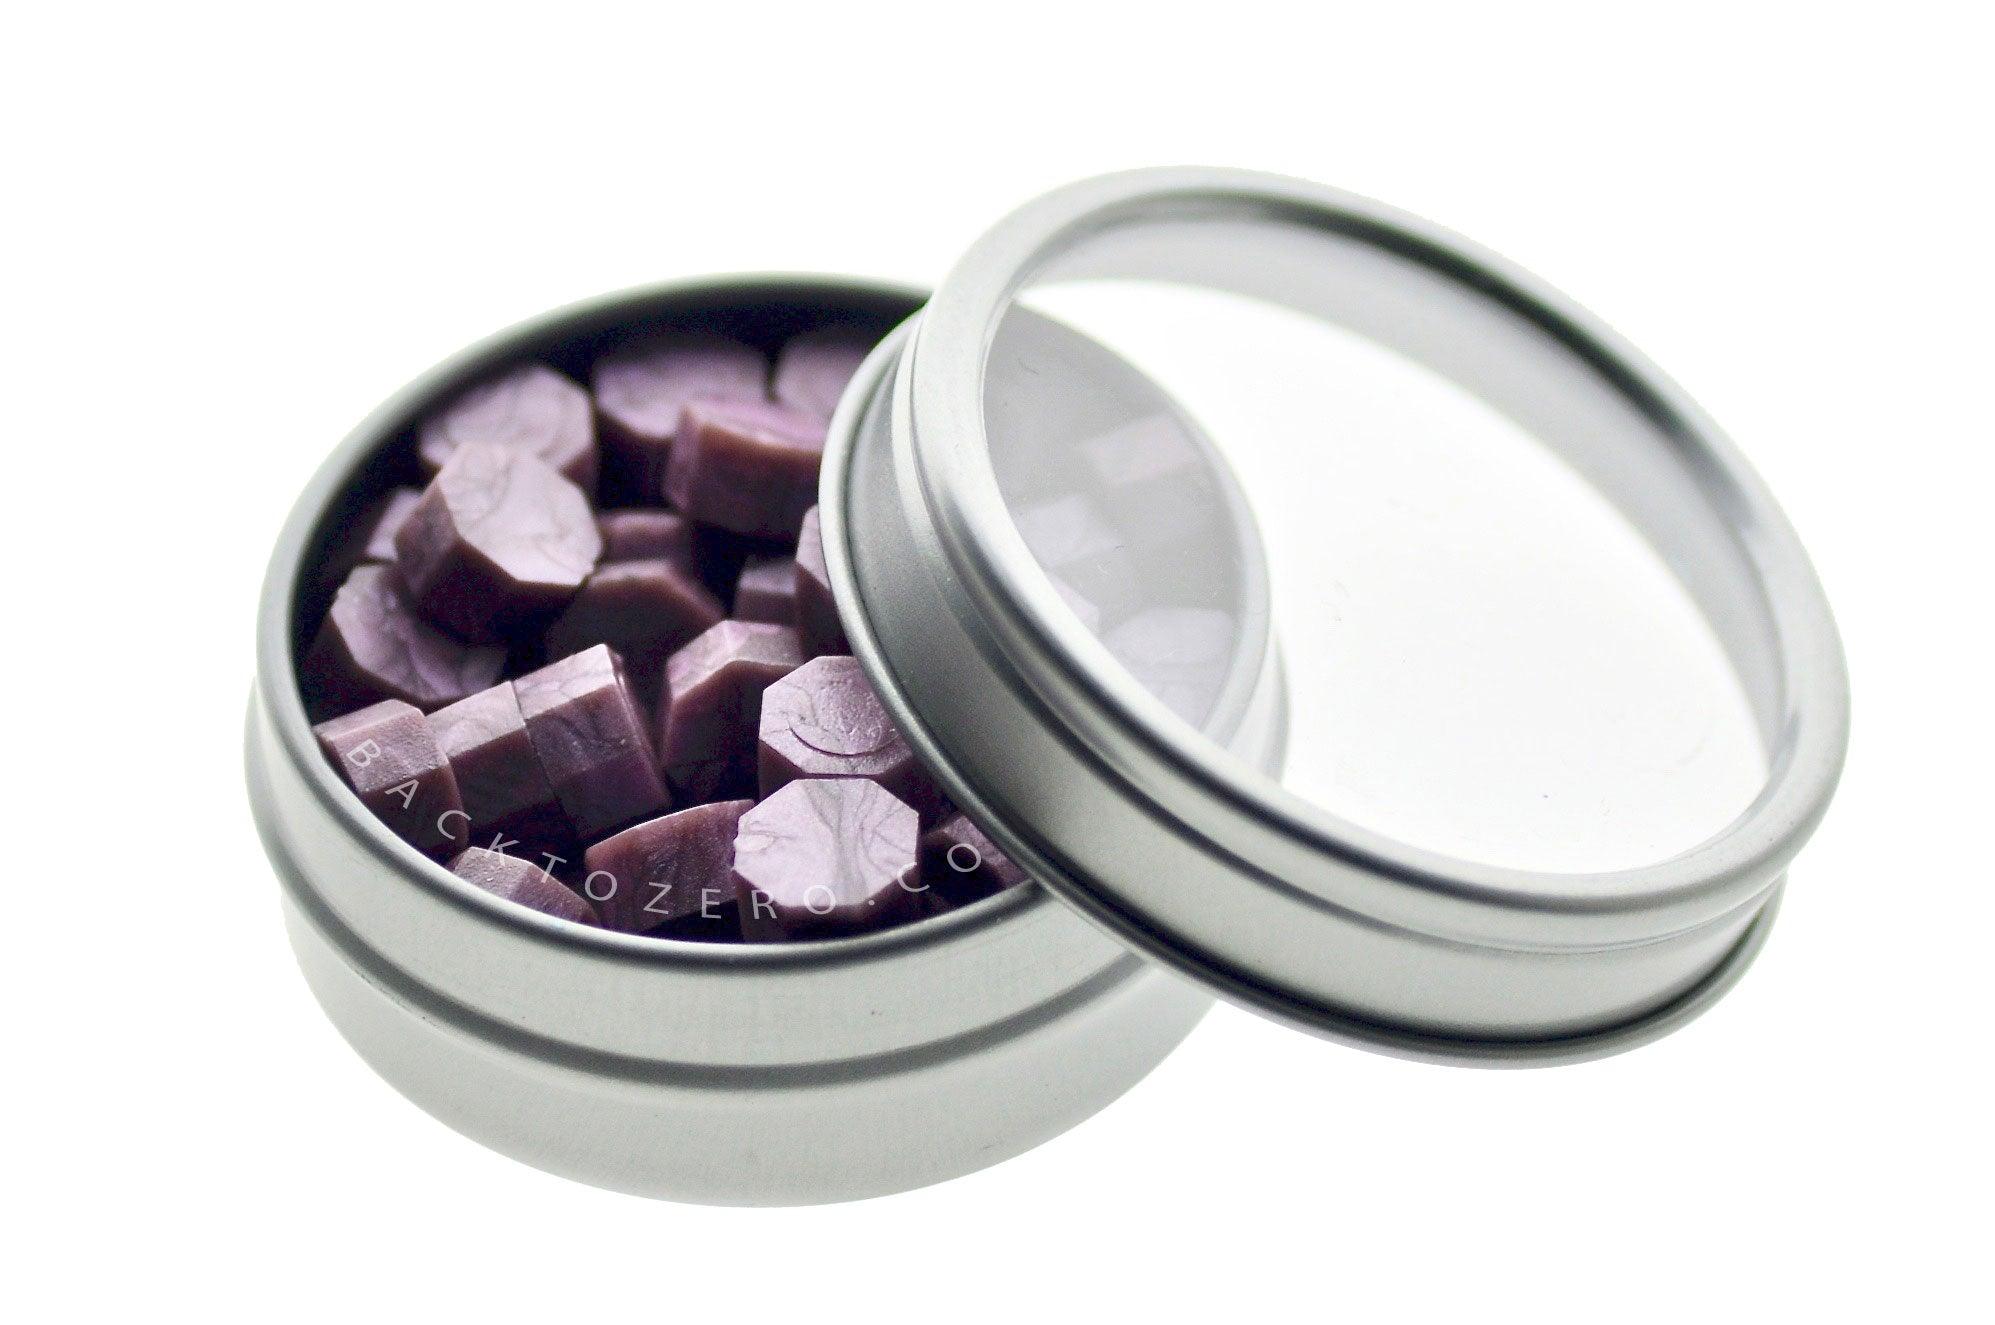 Wisteria Octagon Sealing Wax Beads - Backtozero B20 - octagon bead, purple, sealing wax, tin, Wax Beads, wisteria